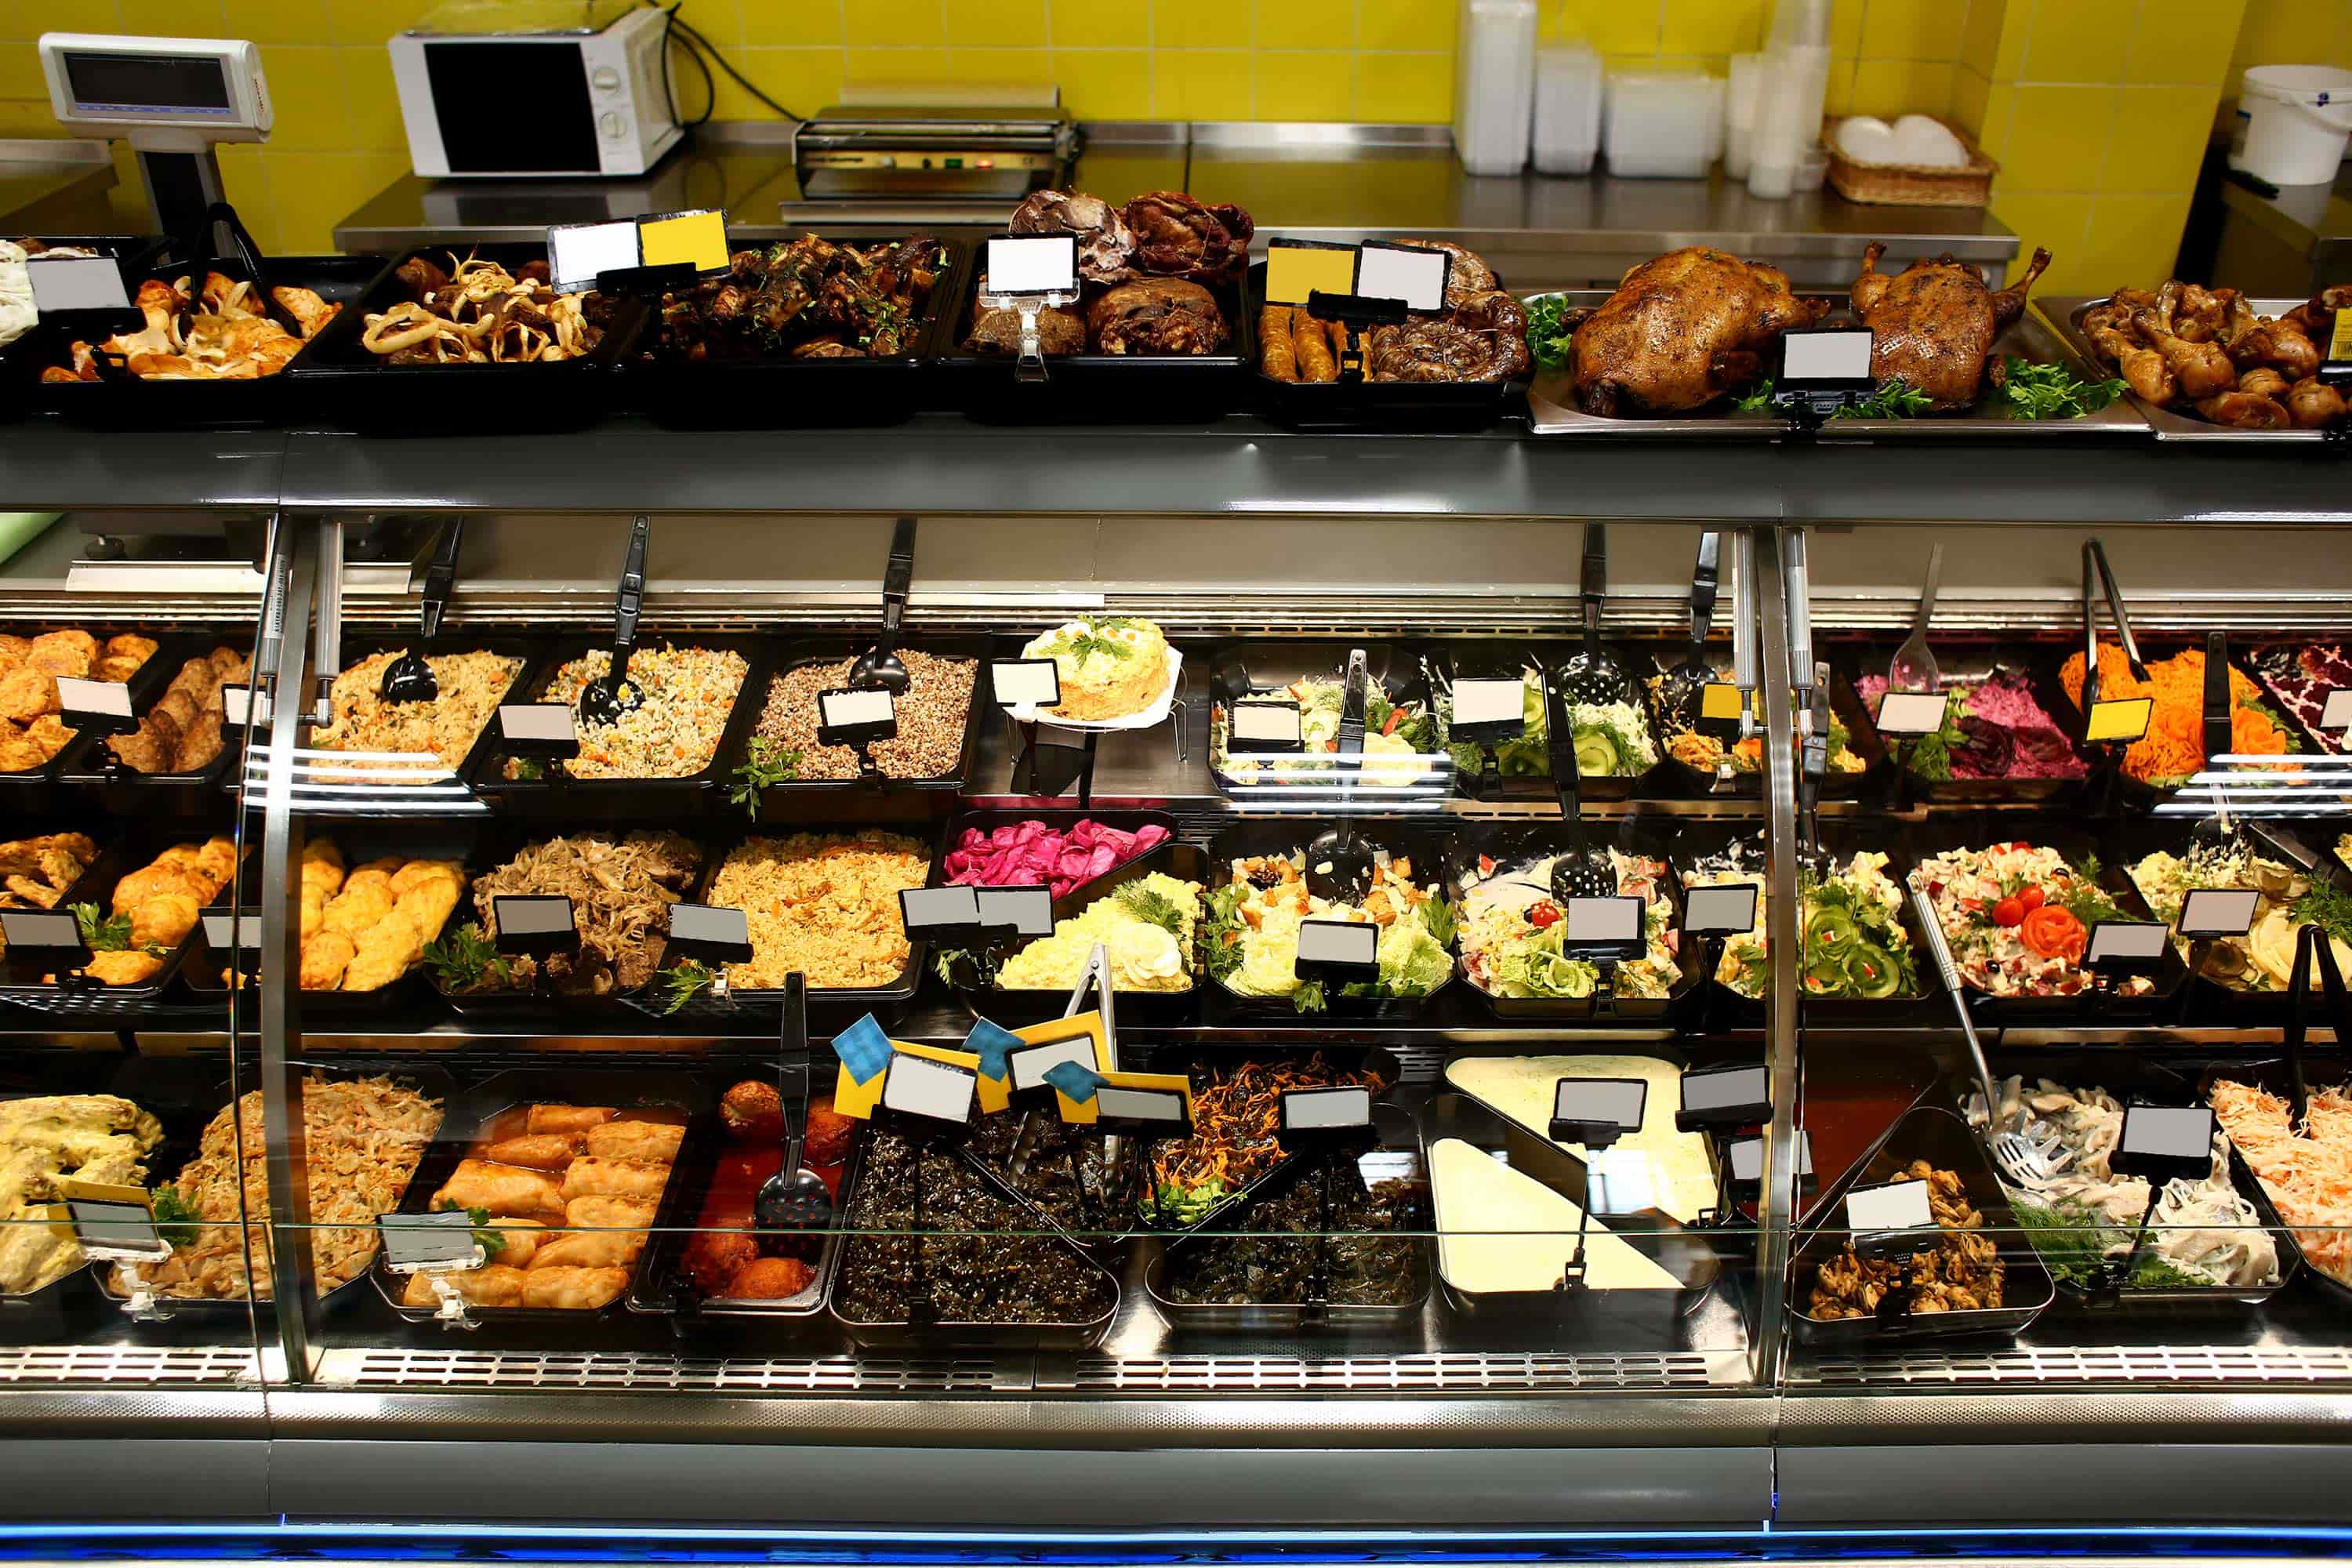 https://www.freshproduce.com/siteassets/images/foodservice/supermarket-prepared-food-display.jpg